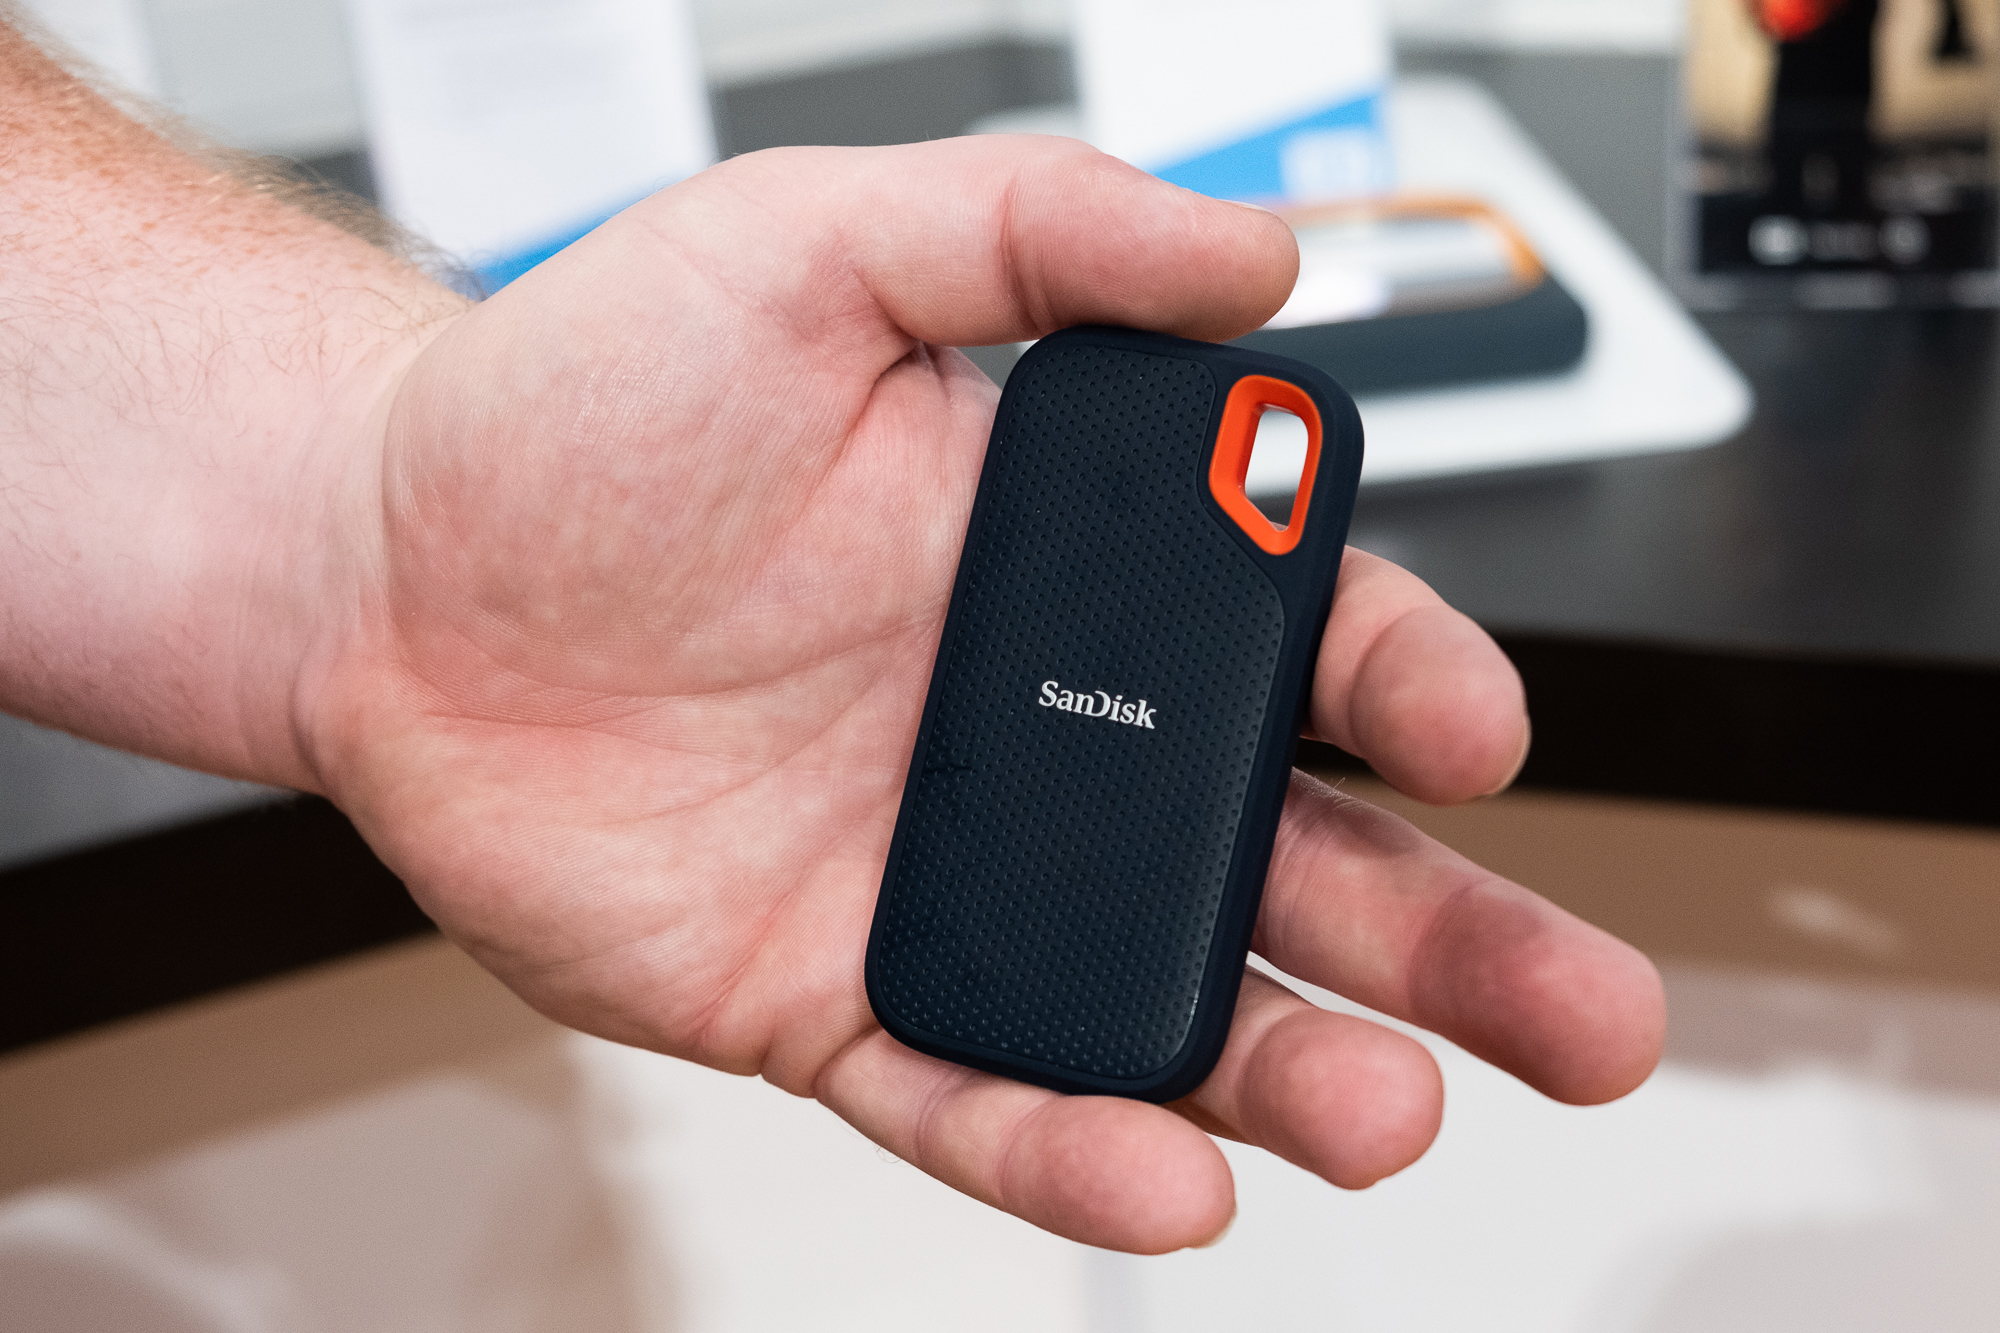 SanDisk 500GB Extreme Portable External SSD